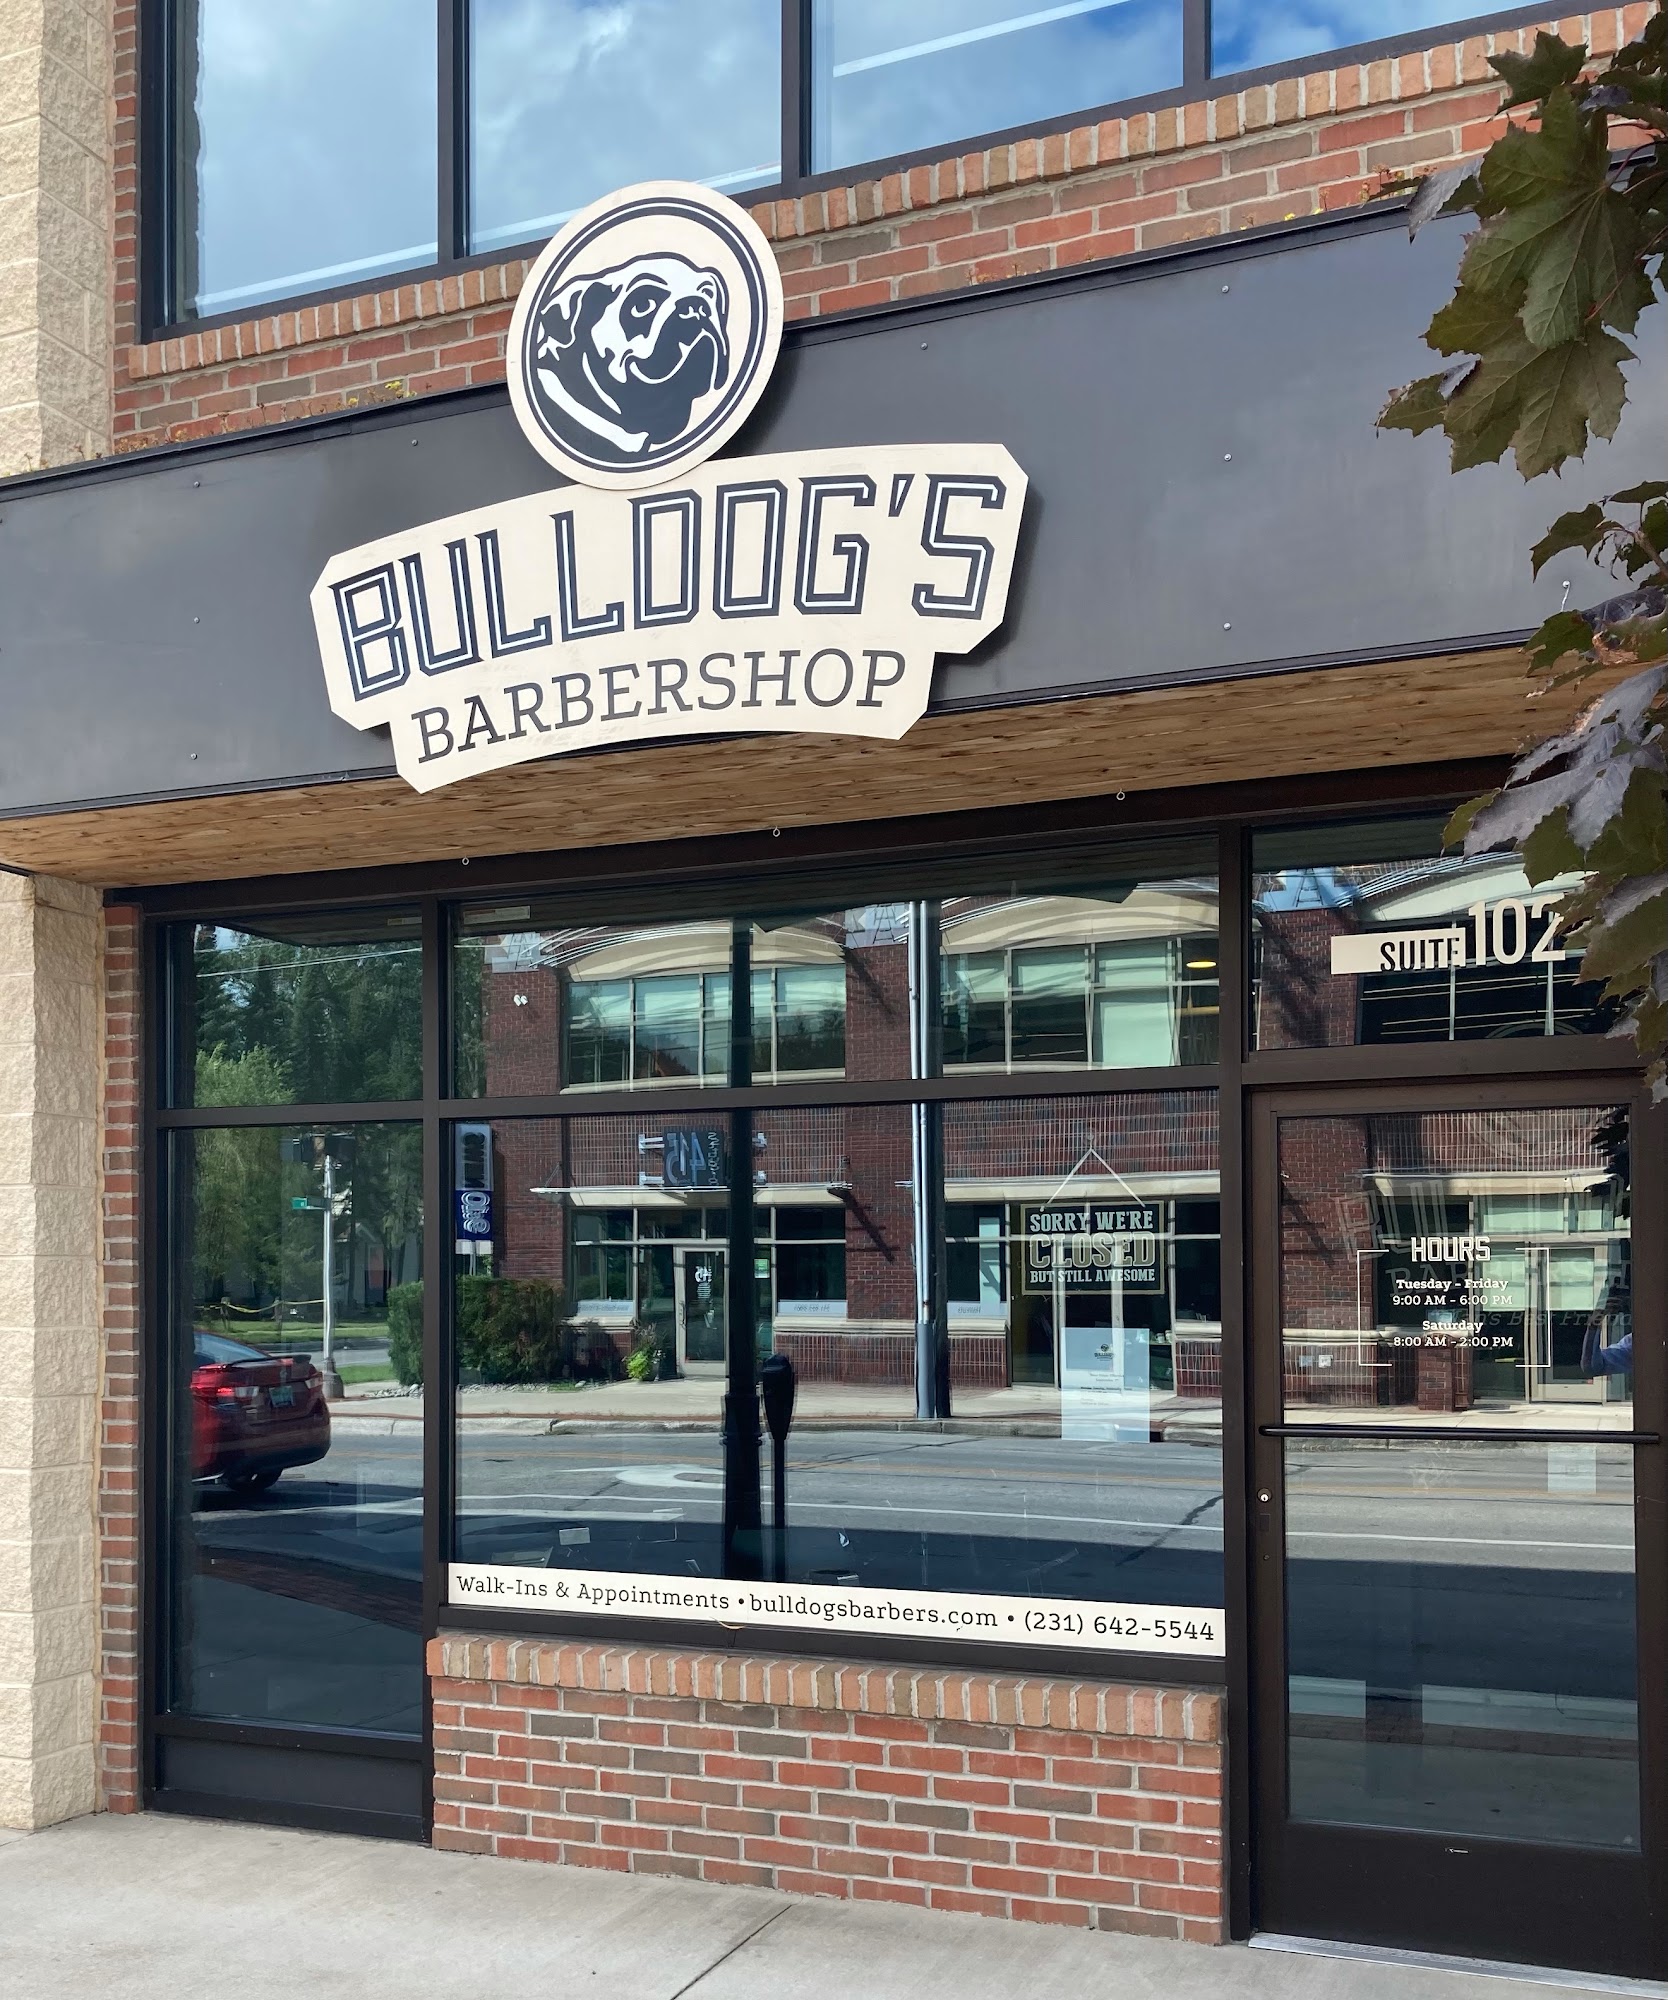 Bulldog's Barbershop